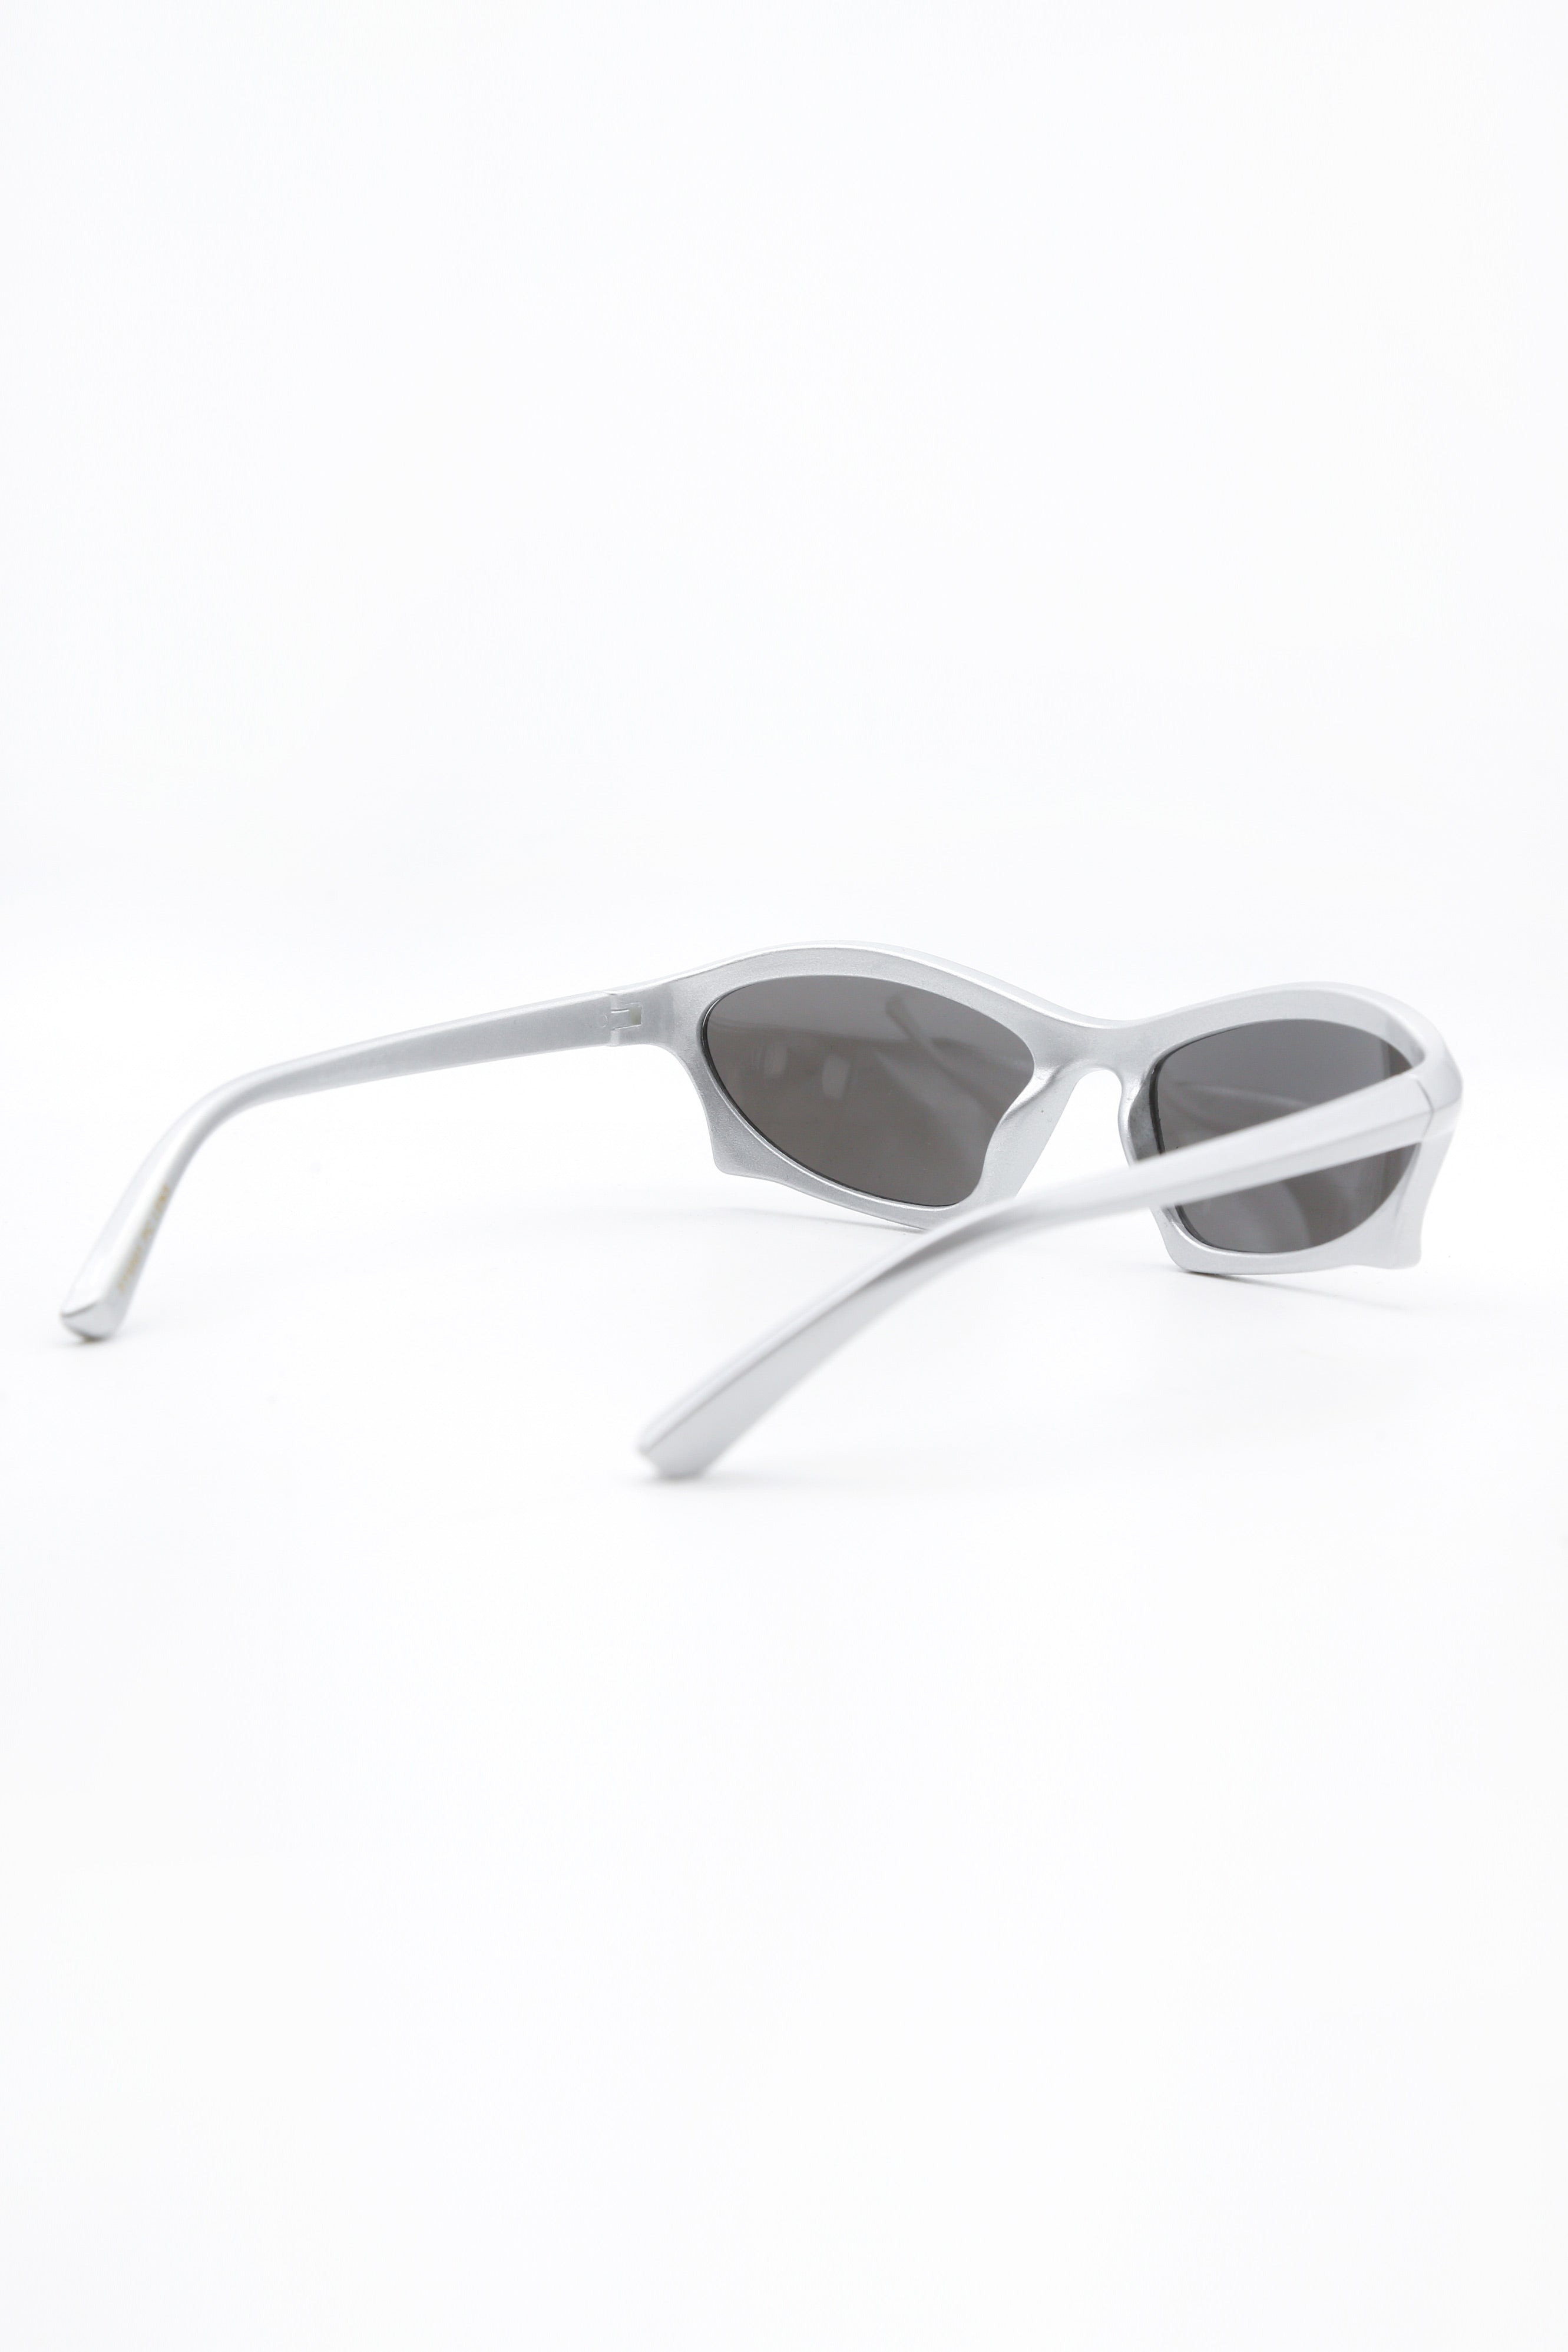 Structured Silver Reflective Sunglasses